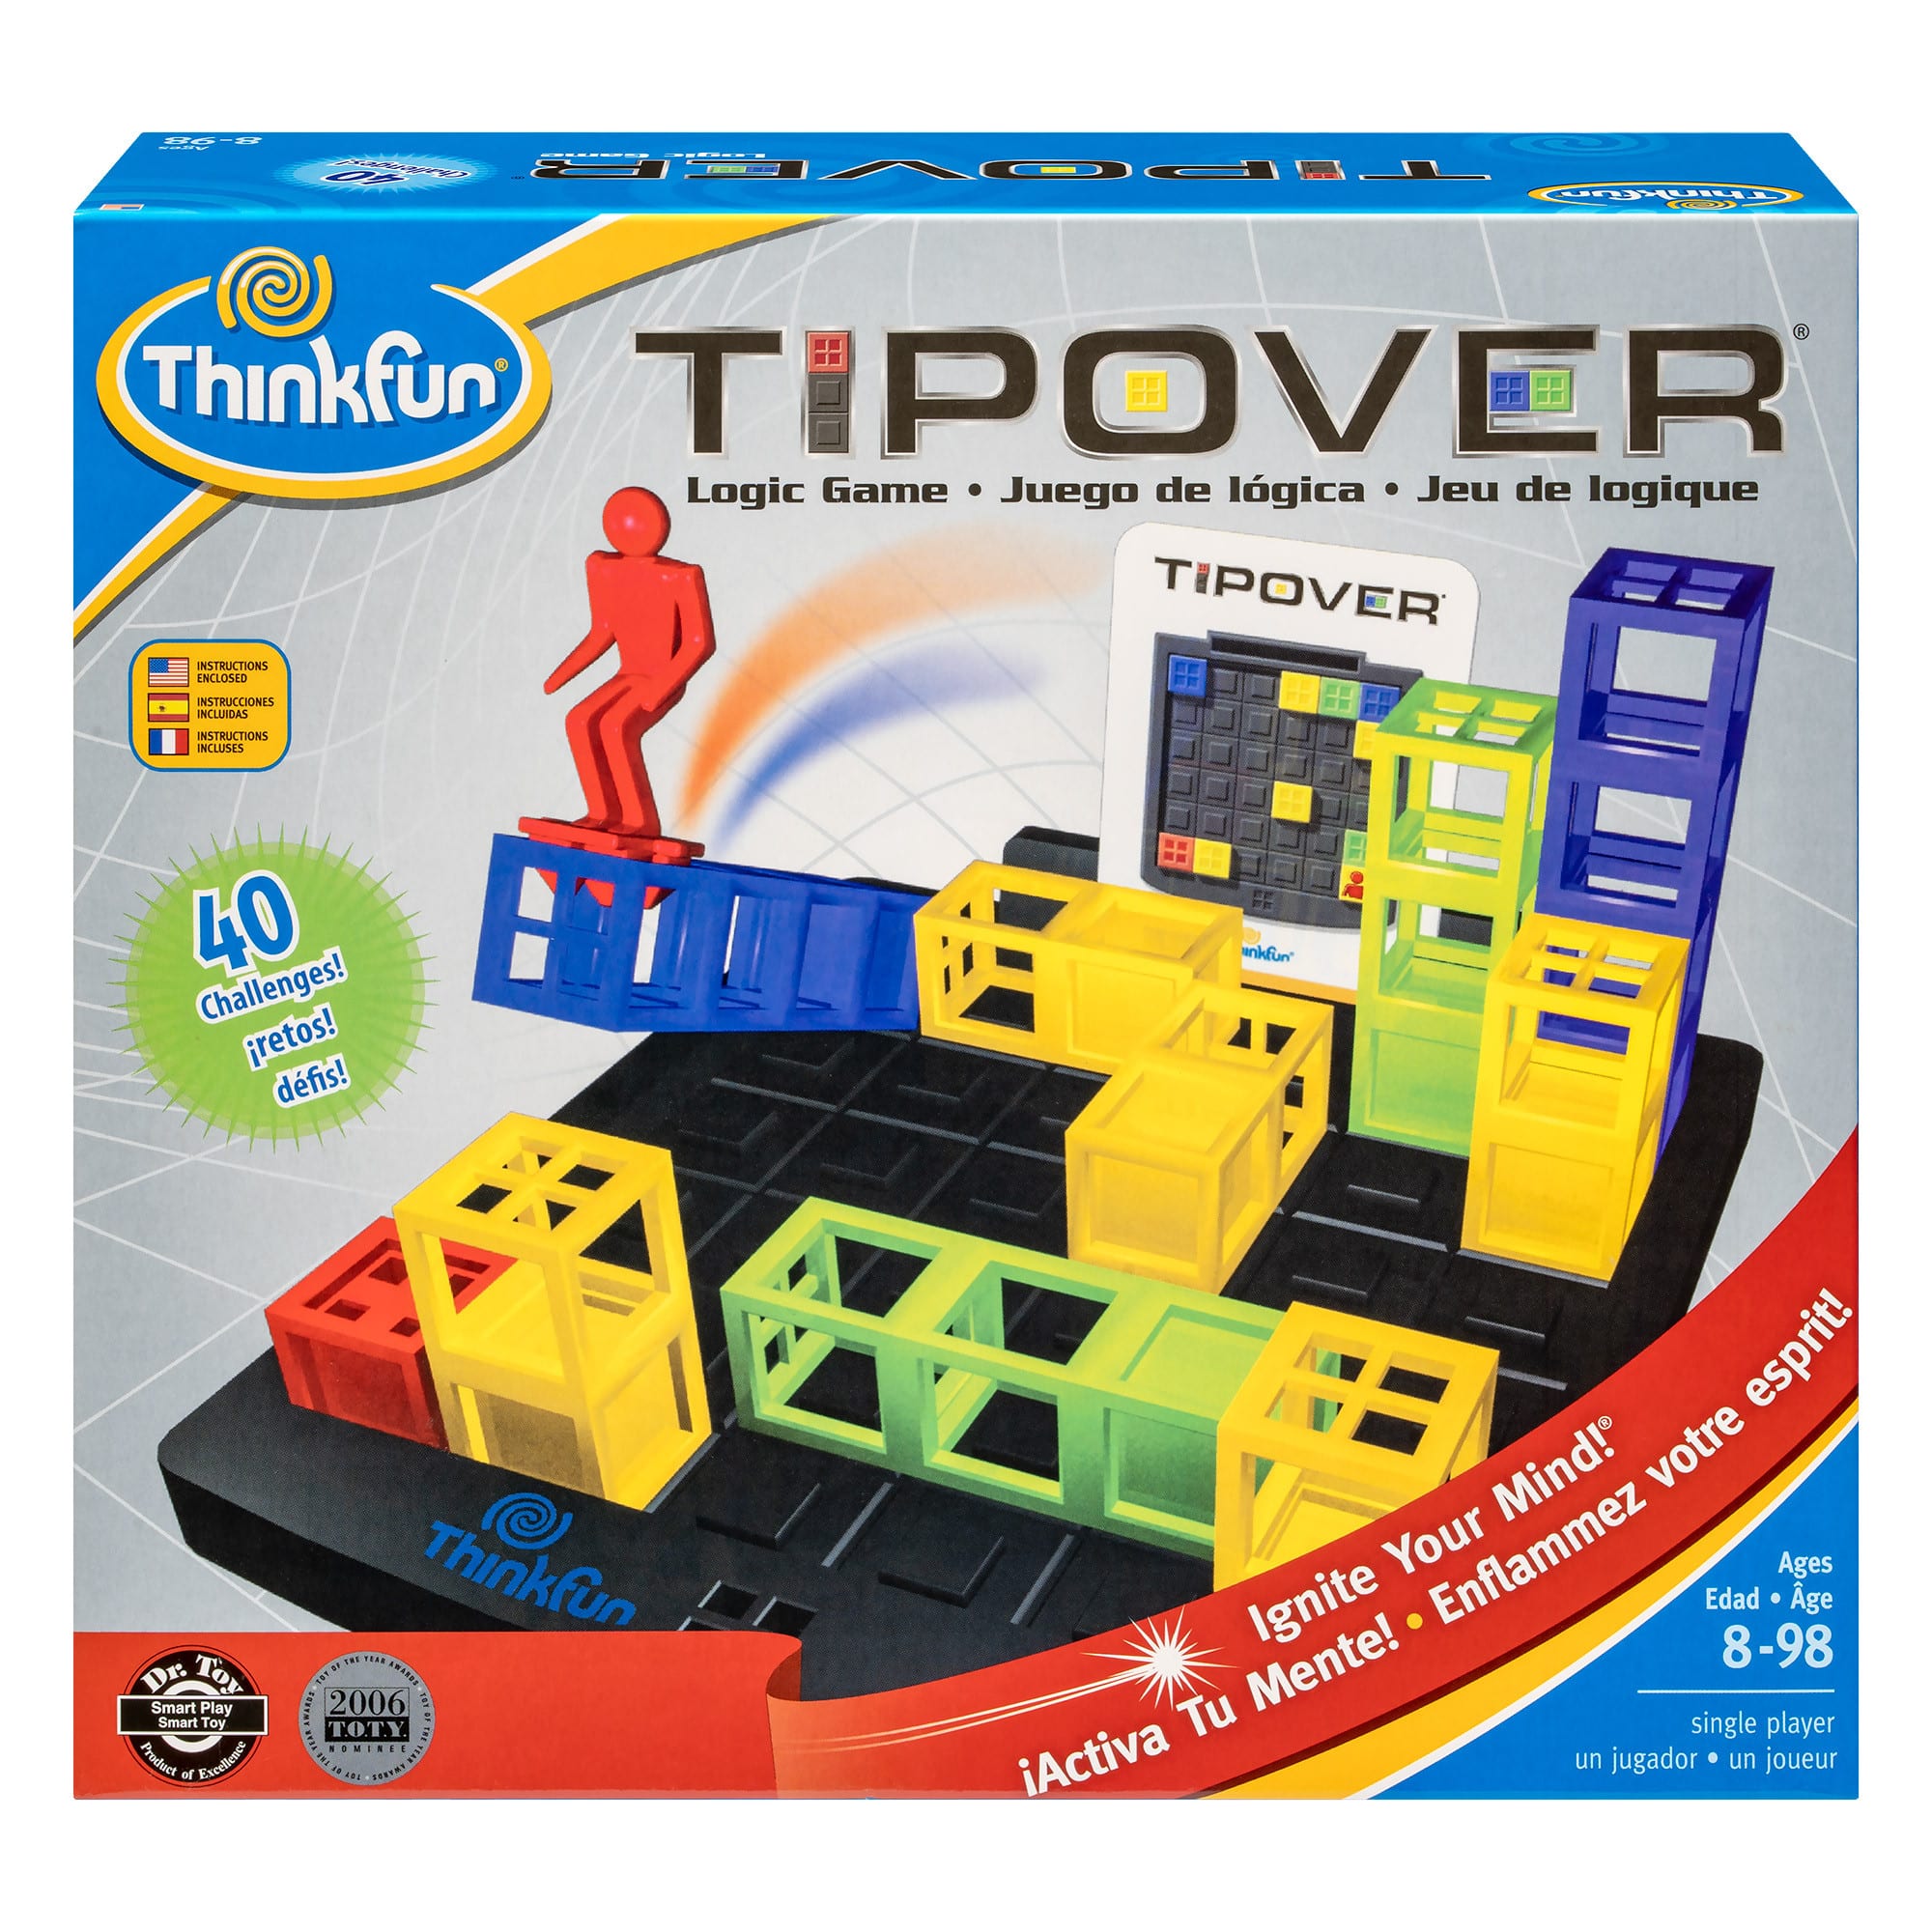 Thinkfun - Tipover Crate Game